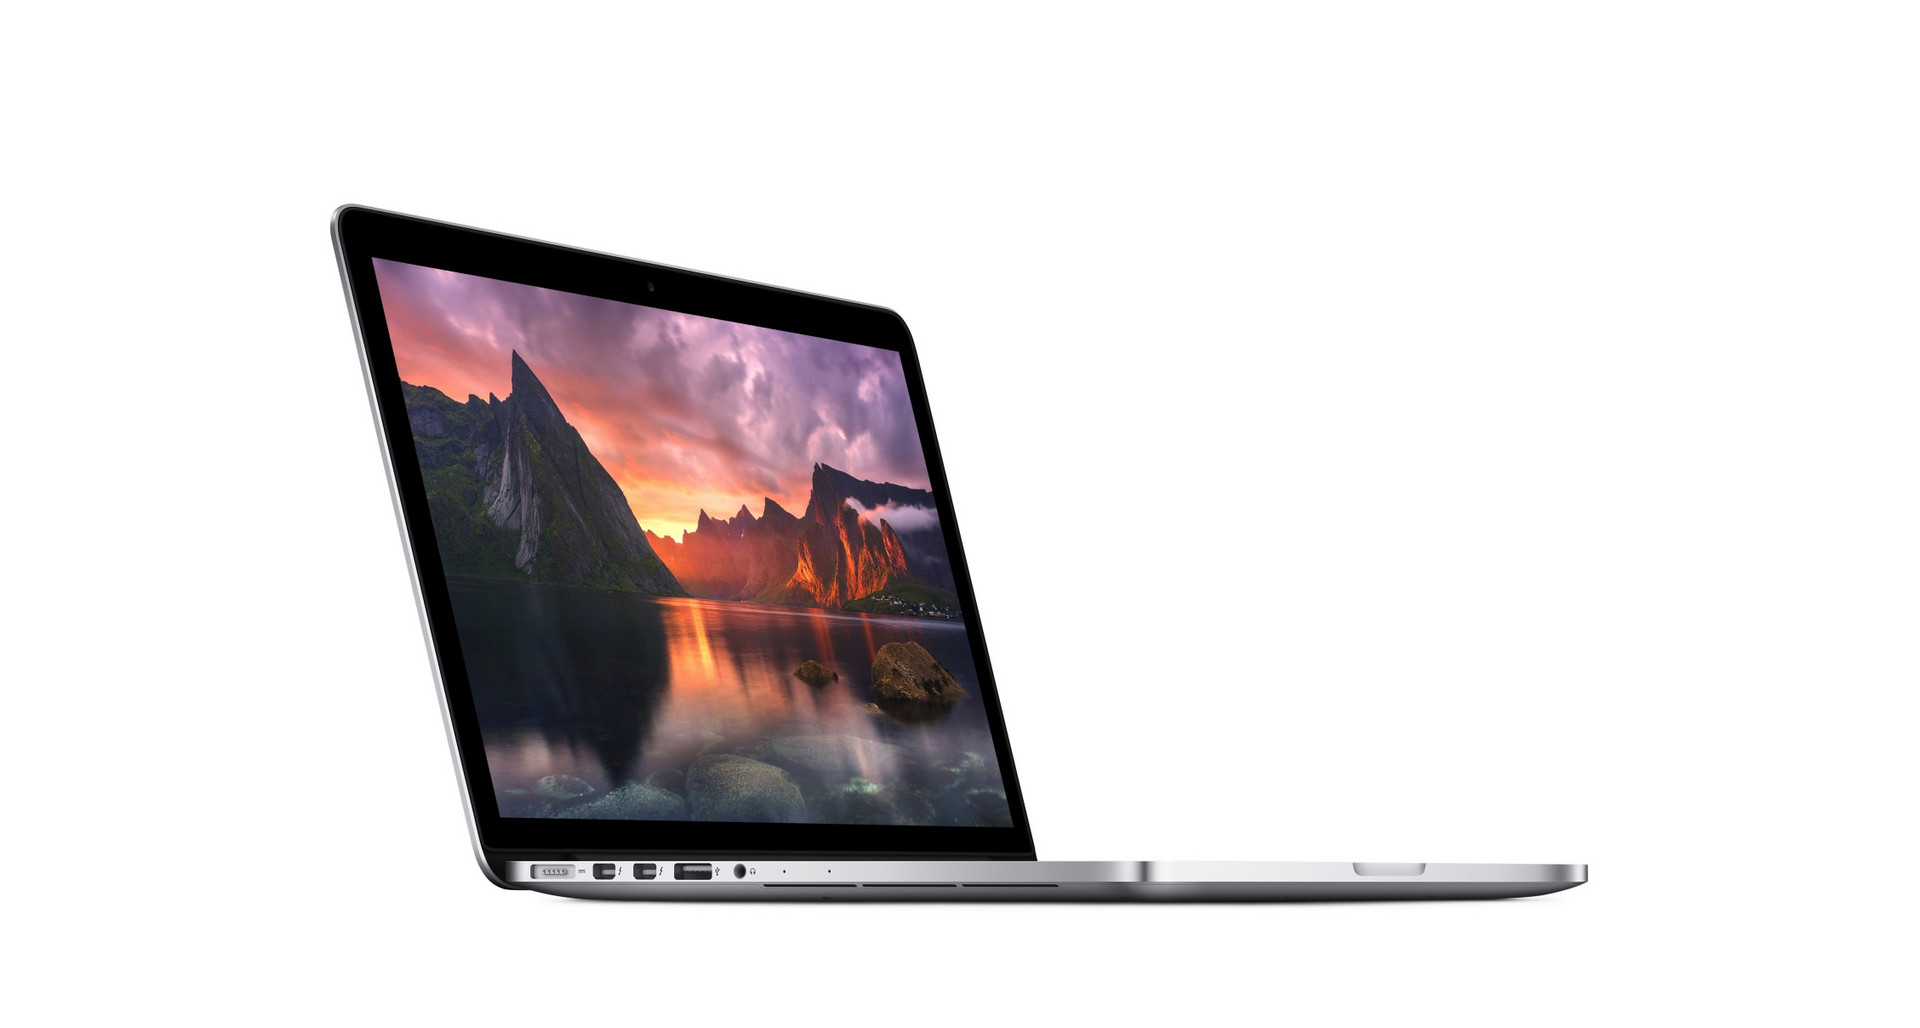 MacBook Pro 15インチ Retina Display 2013